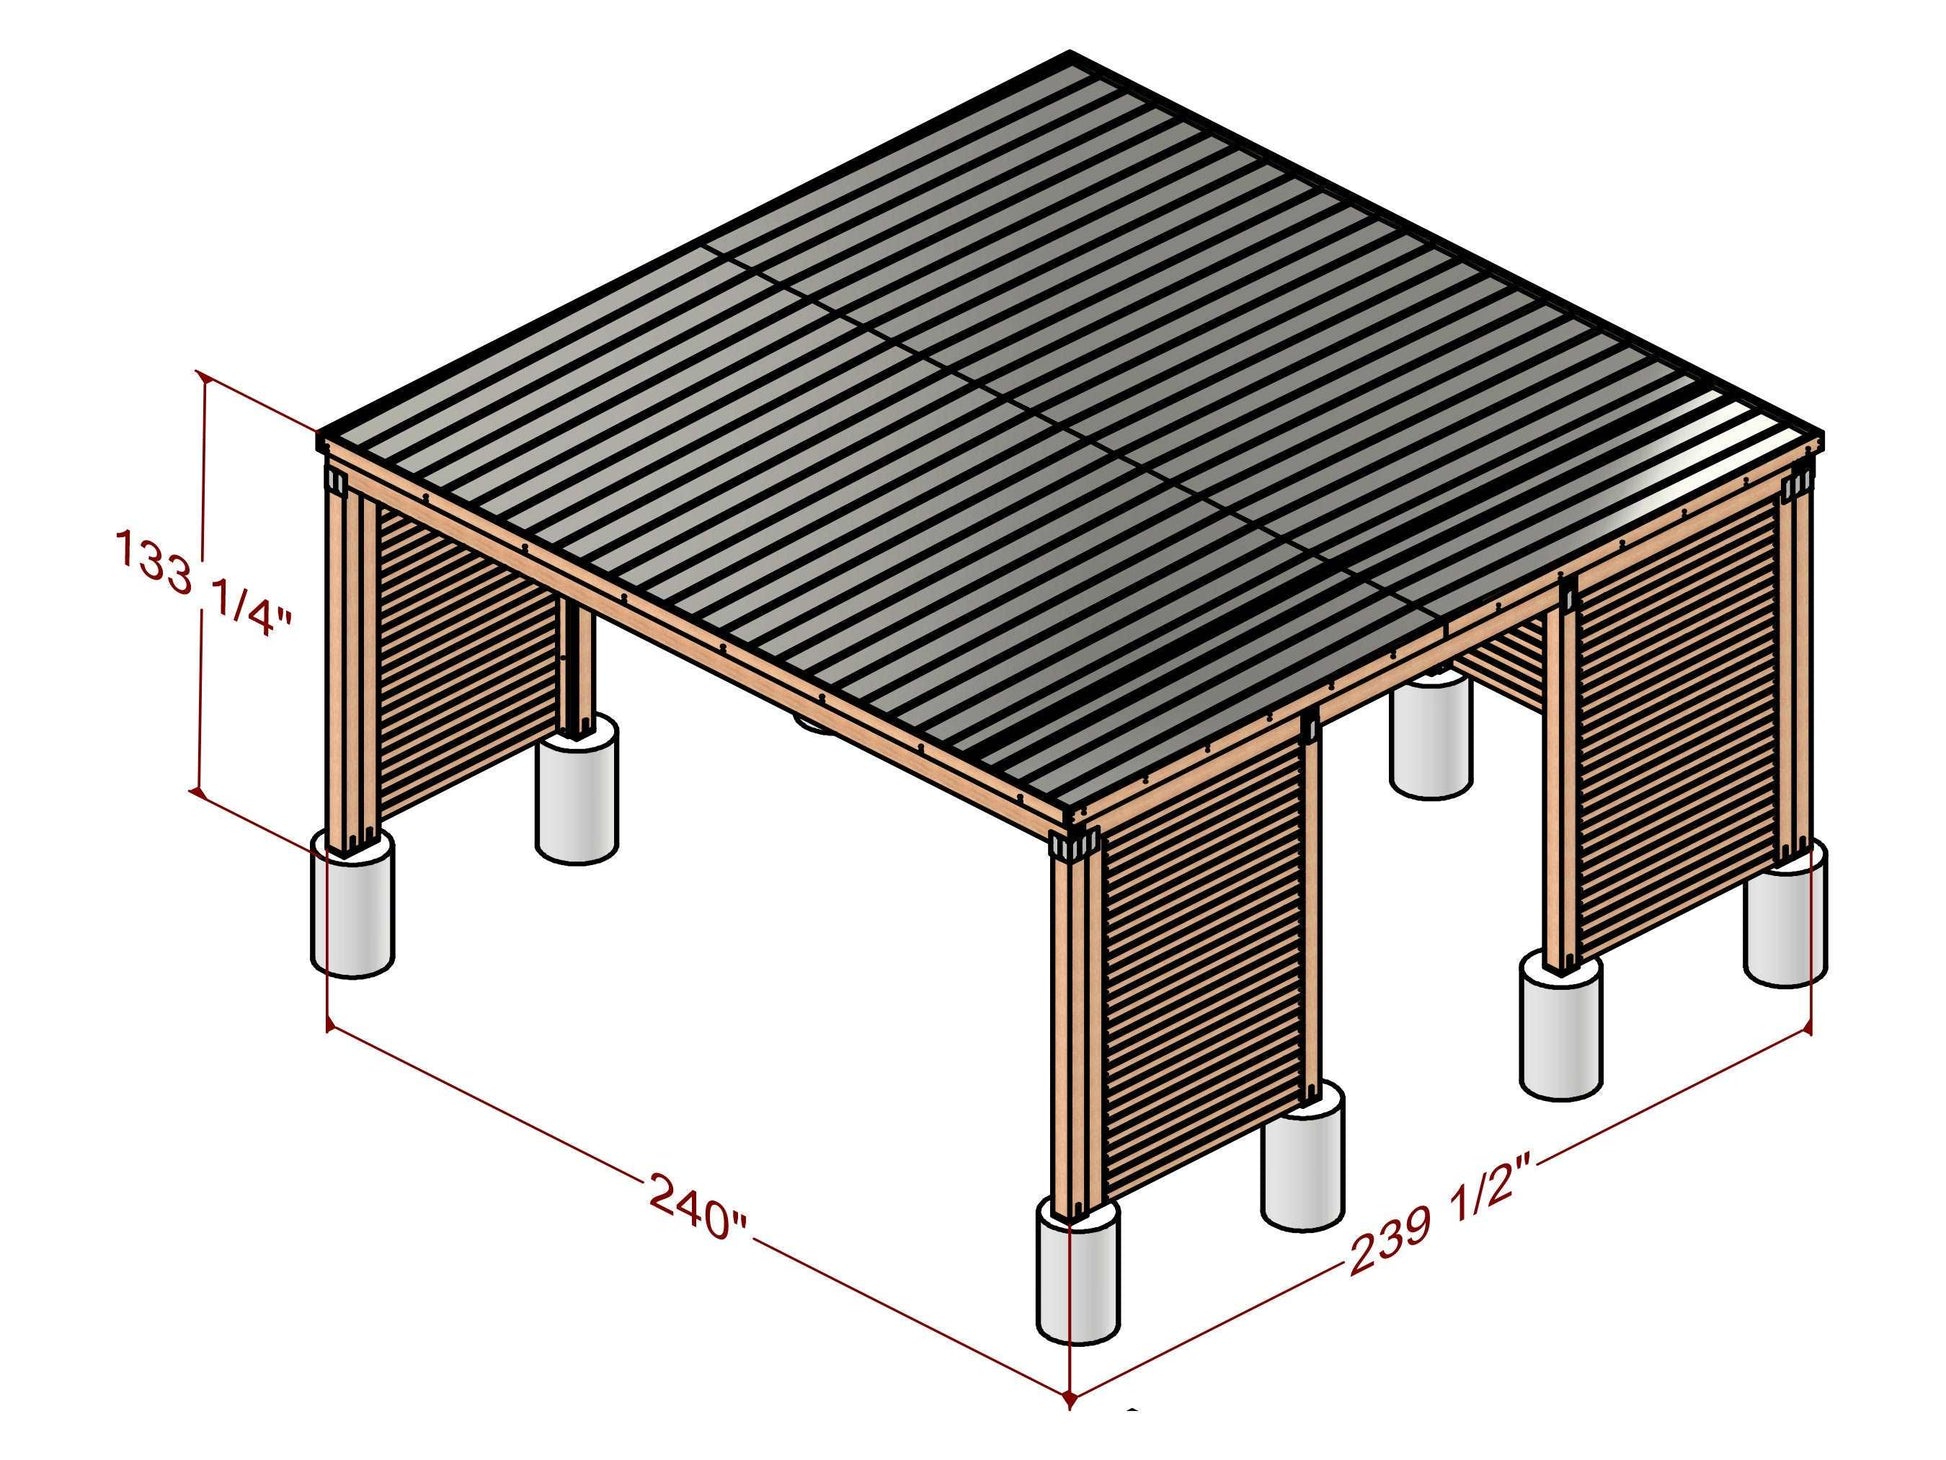 20x20 Modern Car Garage plan - Car Garage for two Car - Modern Pavilion Plans - Wooden Car Port